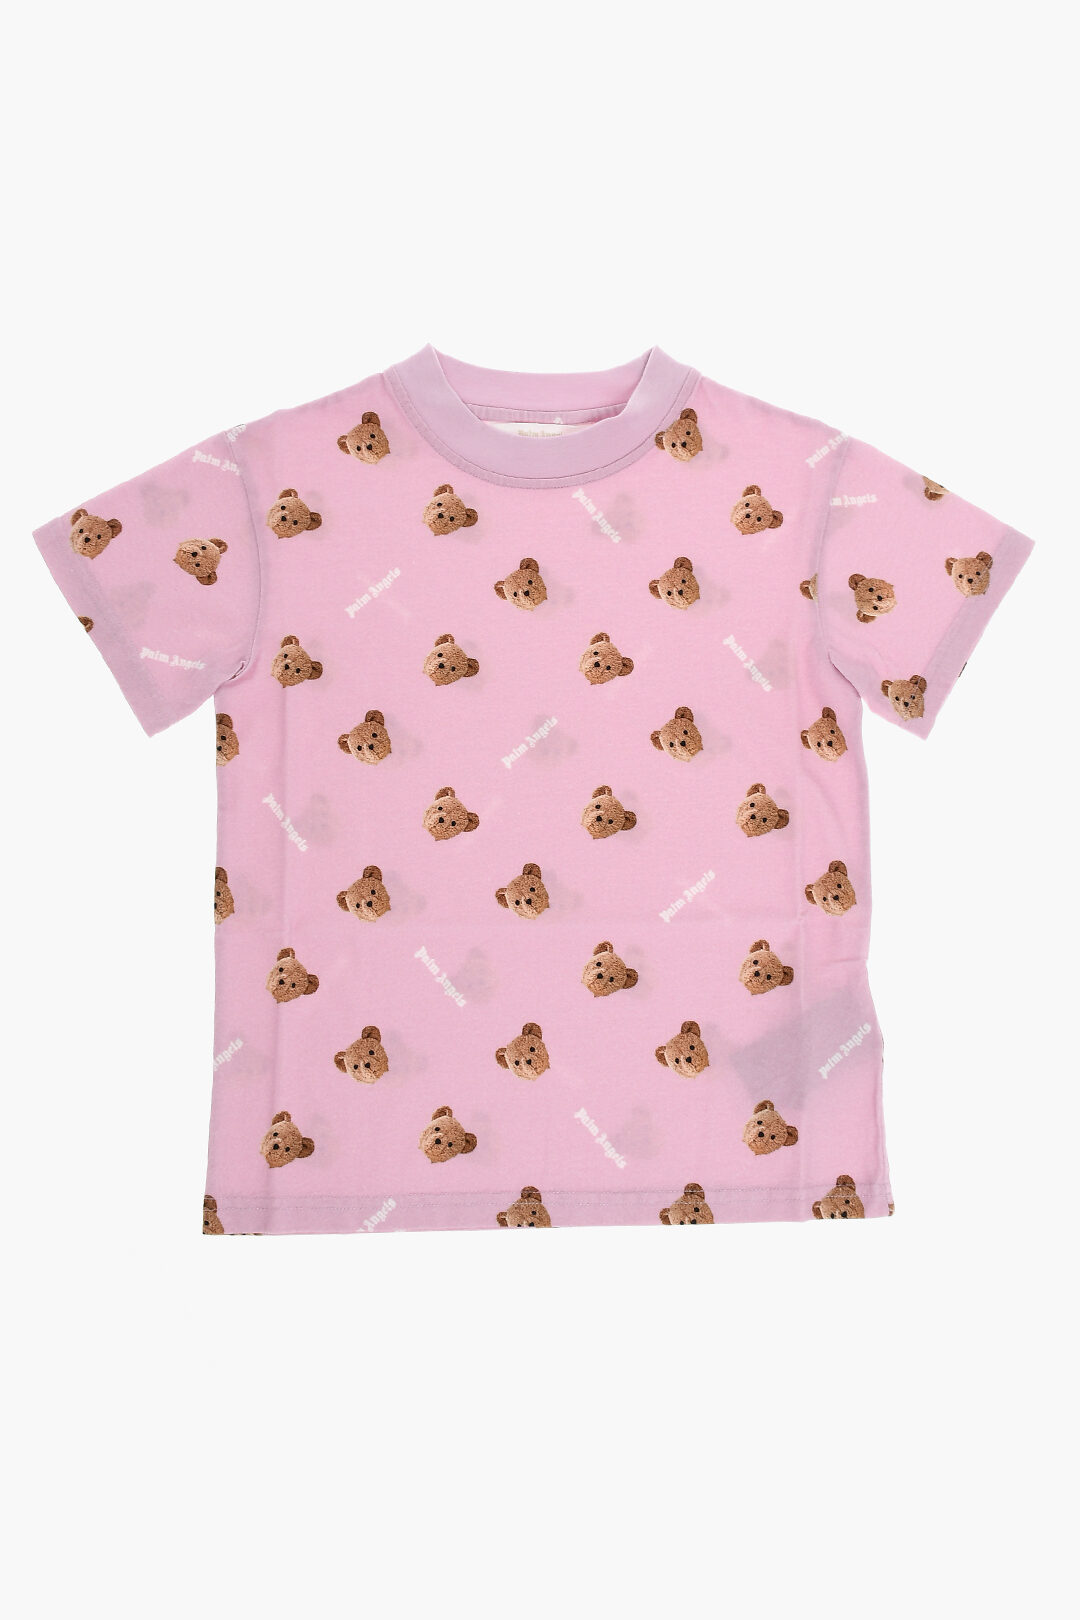 Palm Angels Kids Teddy Bear Print T-Shirt - ShopStyle Boys' Tees